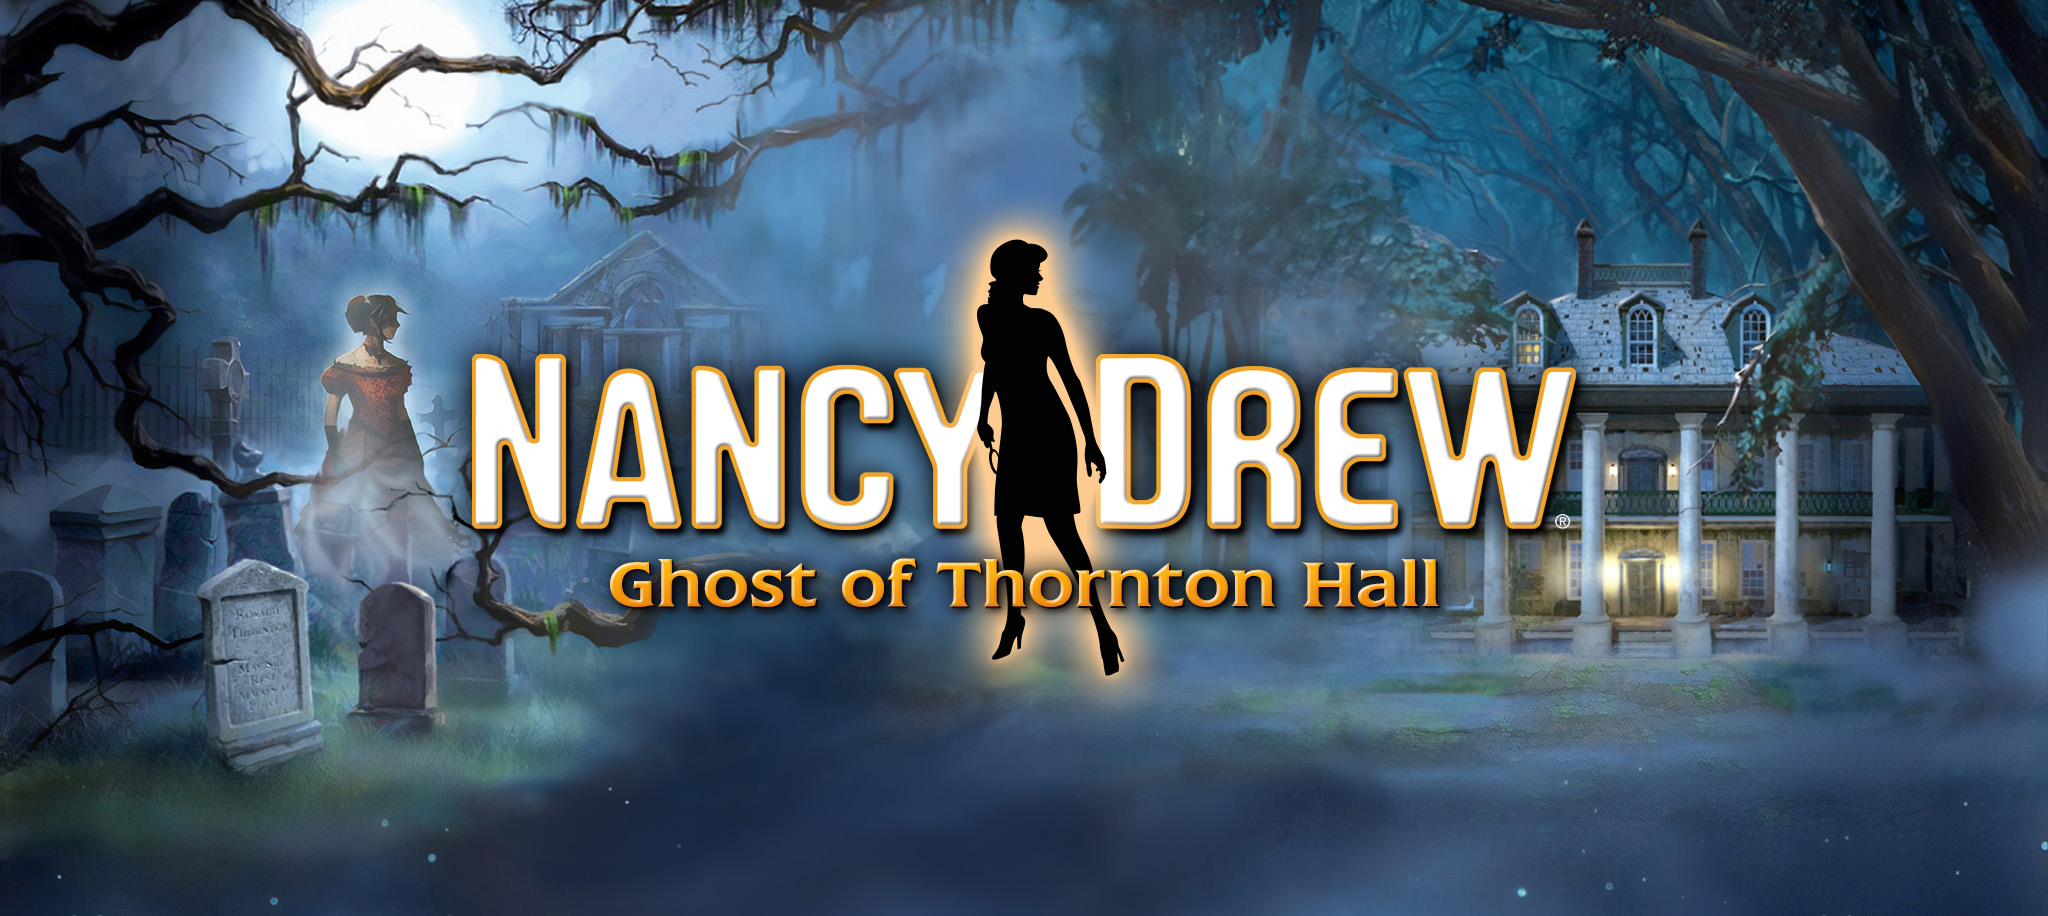 Ghost of Thornton Hall